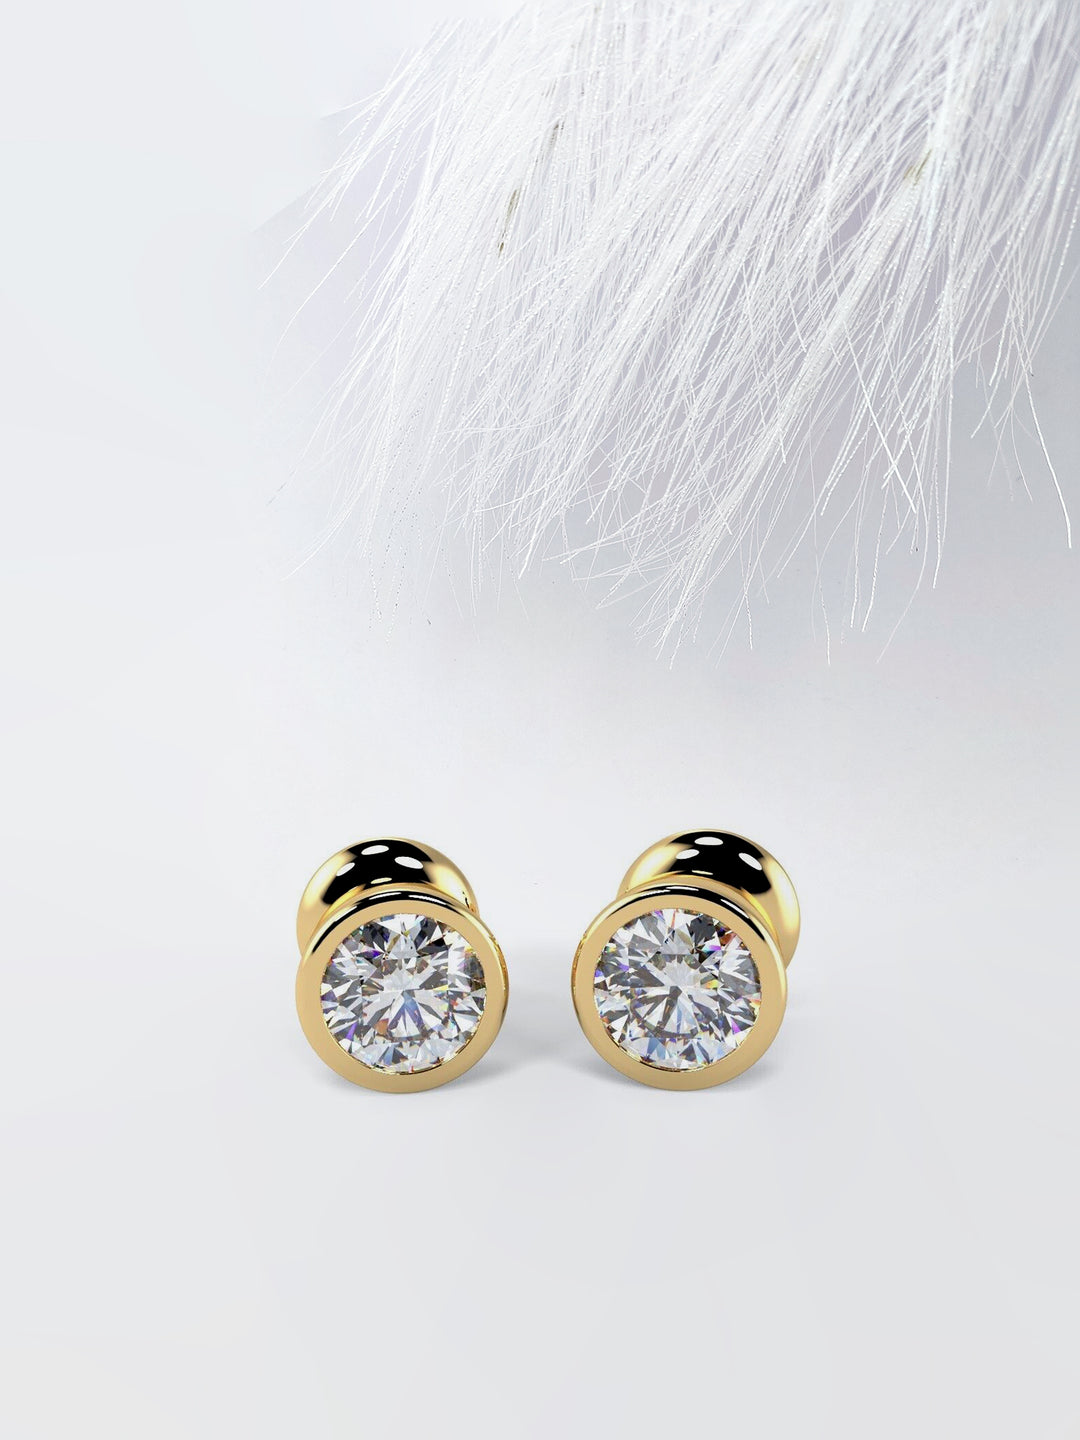 Bezel Set Round Cut Moissanite Diamond Stud Earrings in Yellow Gold